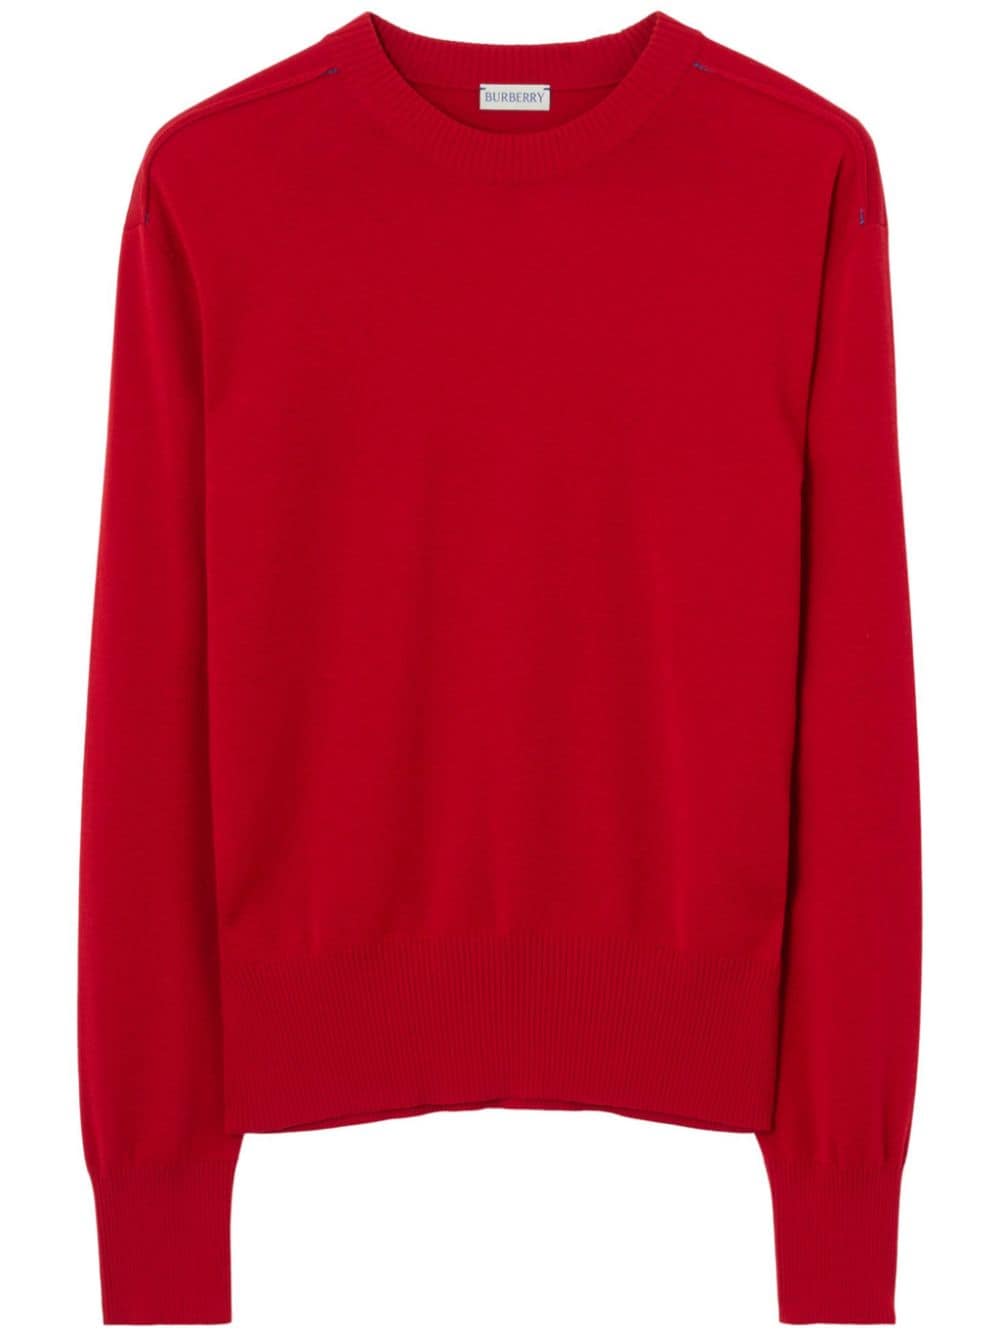 Burberry Klassischer Pullover - Rot von Burberry